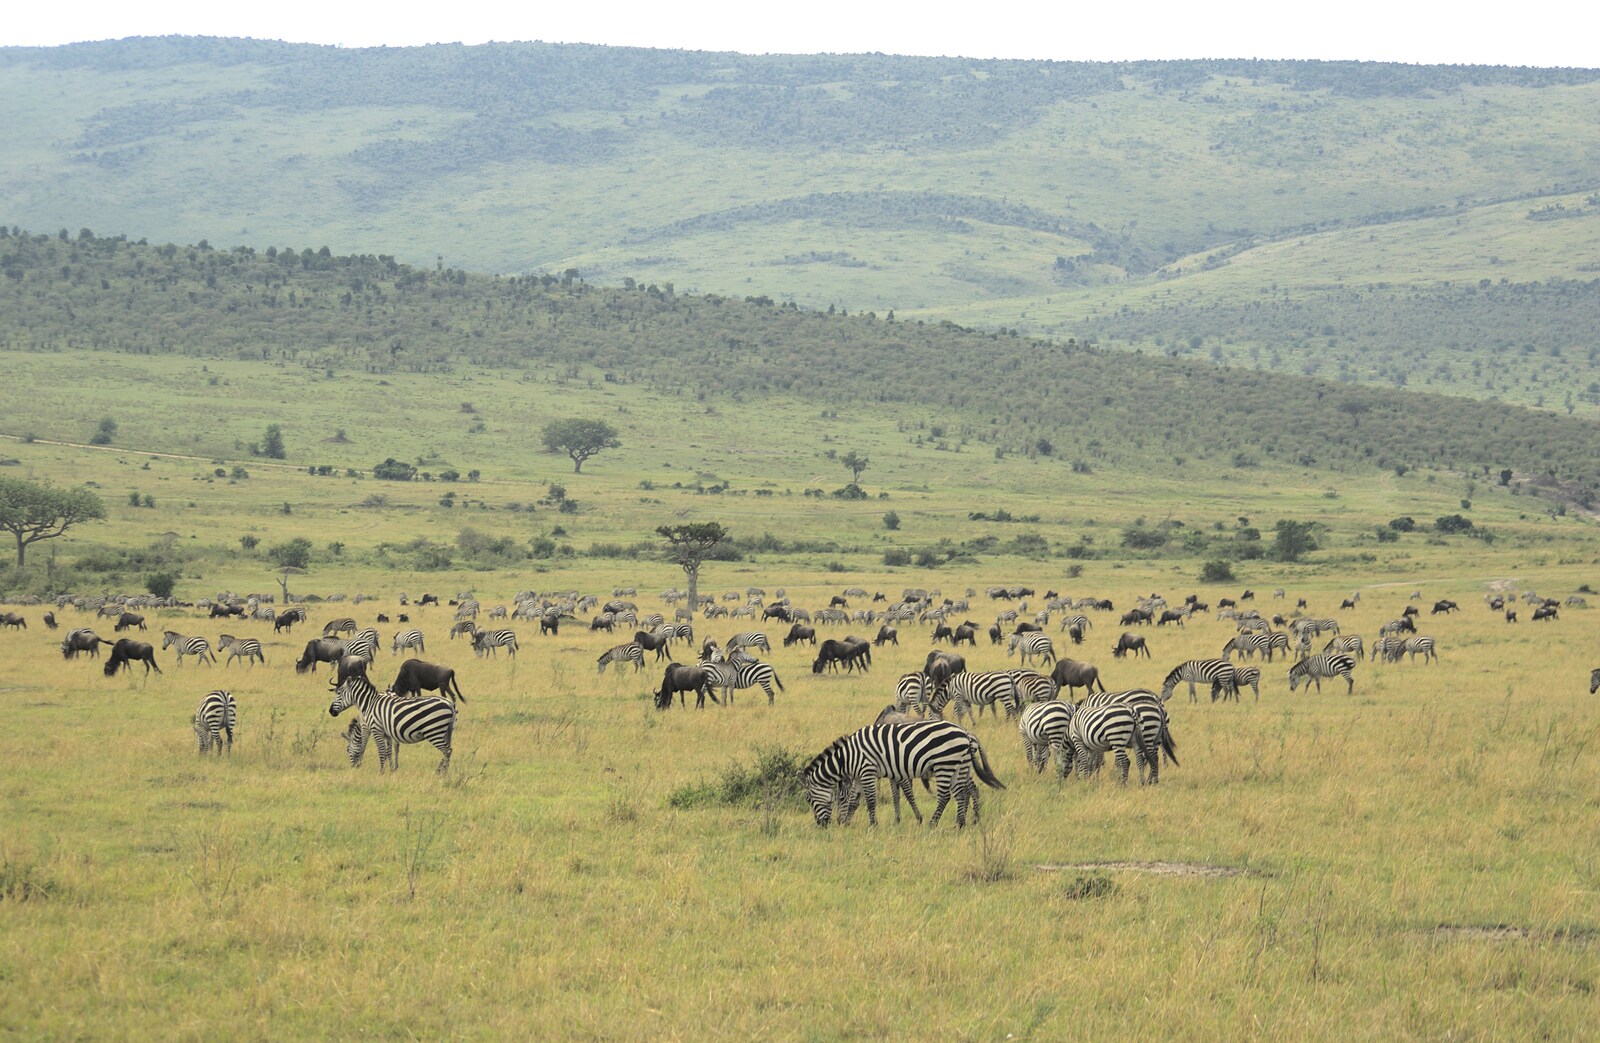 Maasai Mara Safari and a Maasai Village, Ololaimutia, Kenya - 5th November 2010: A mixed herd of wildebeest and zebra